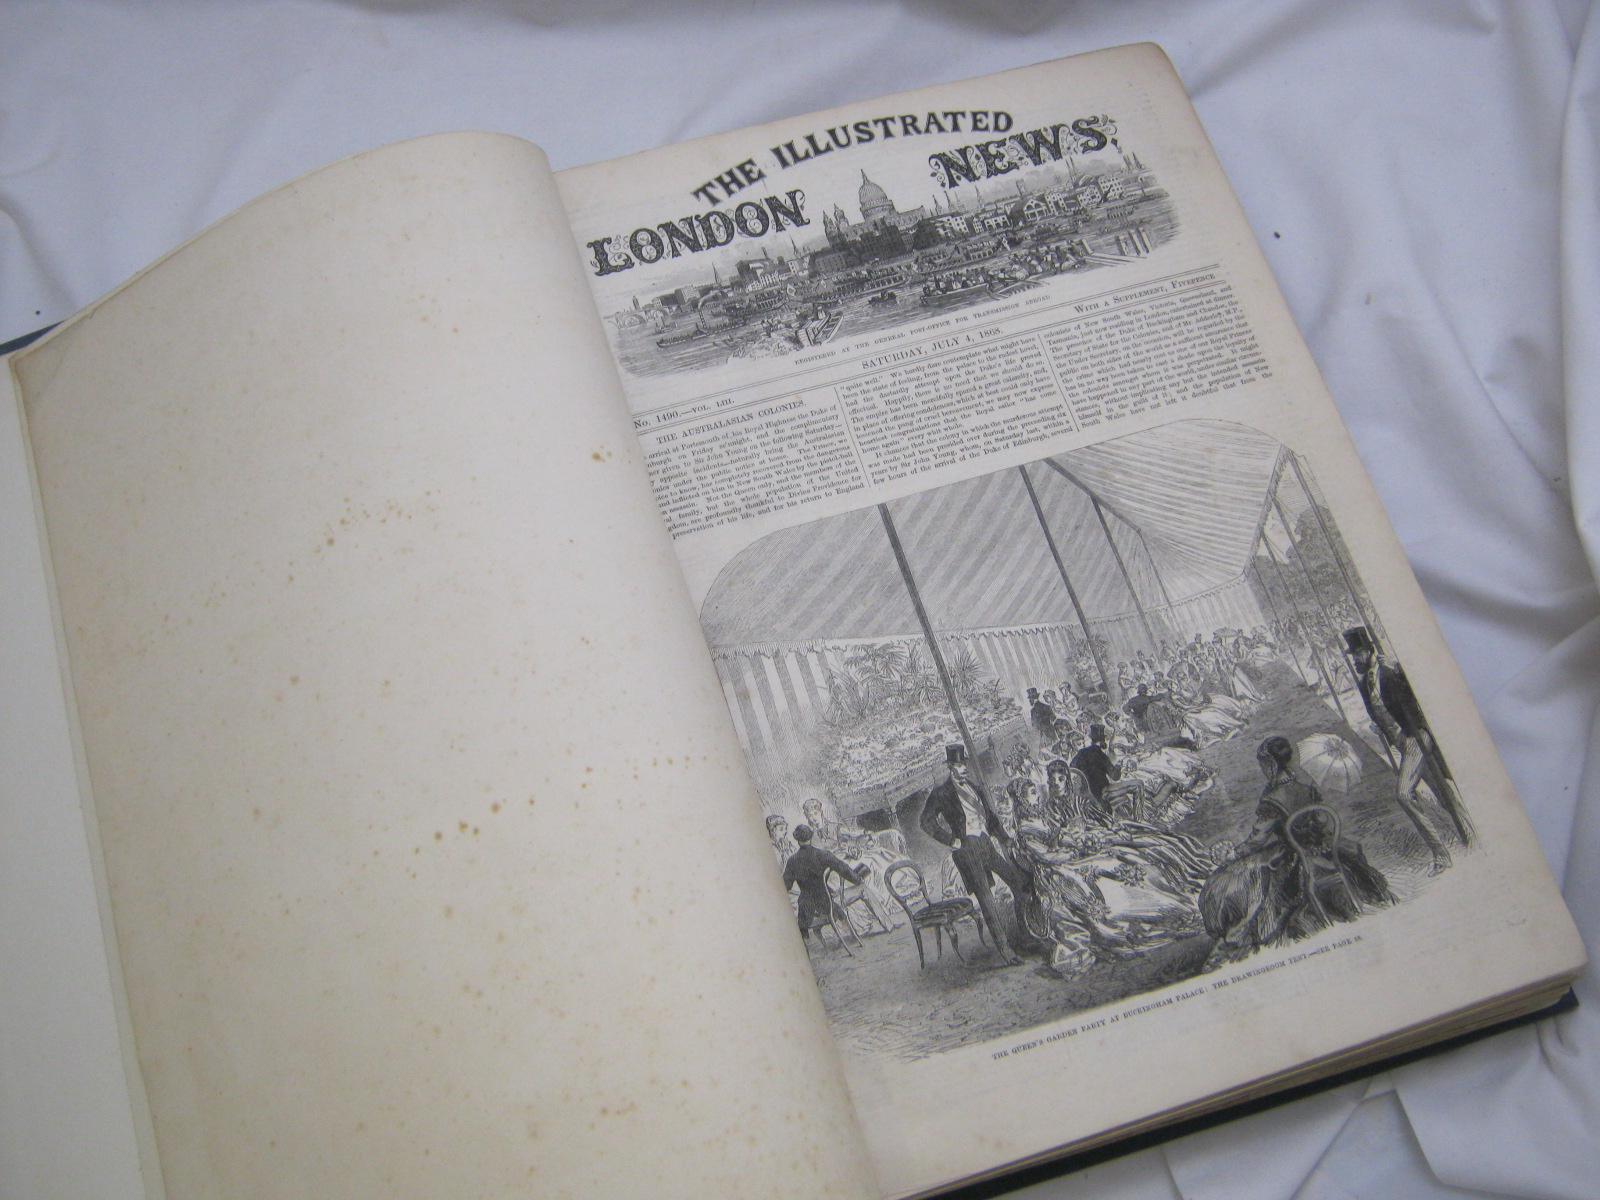 THE ILLUSTRATED LONDON NEWS, July - December 1867 vol 51, July - December 1868 vol 53, each rebnd